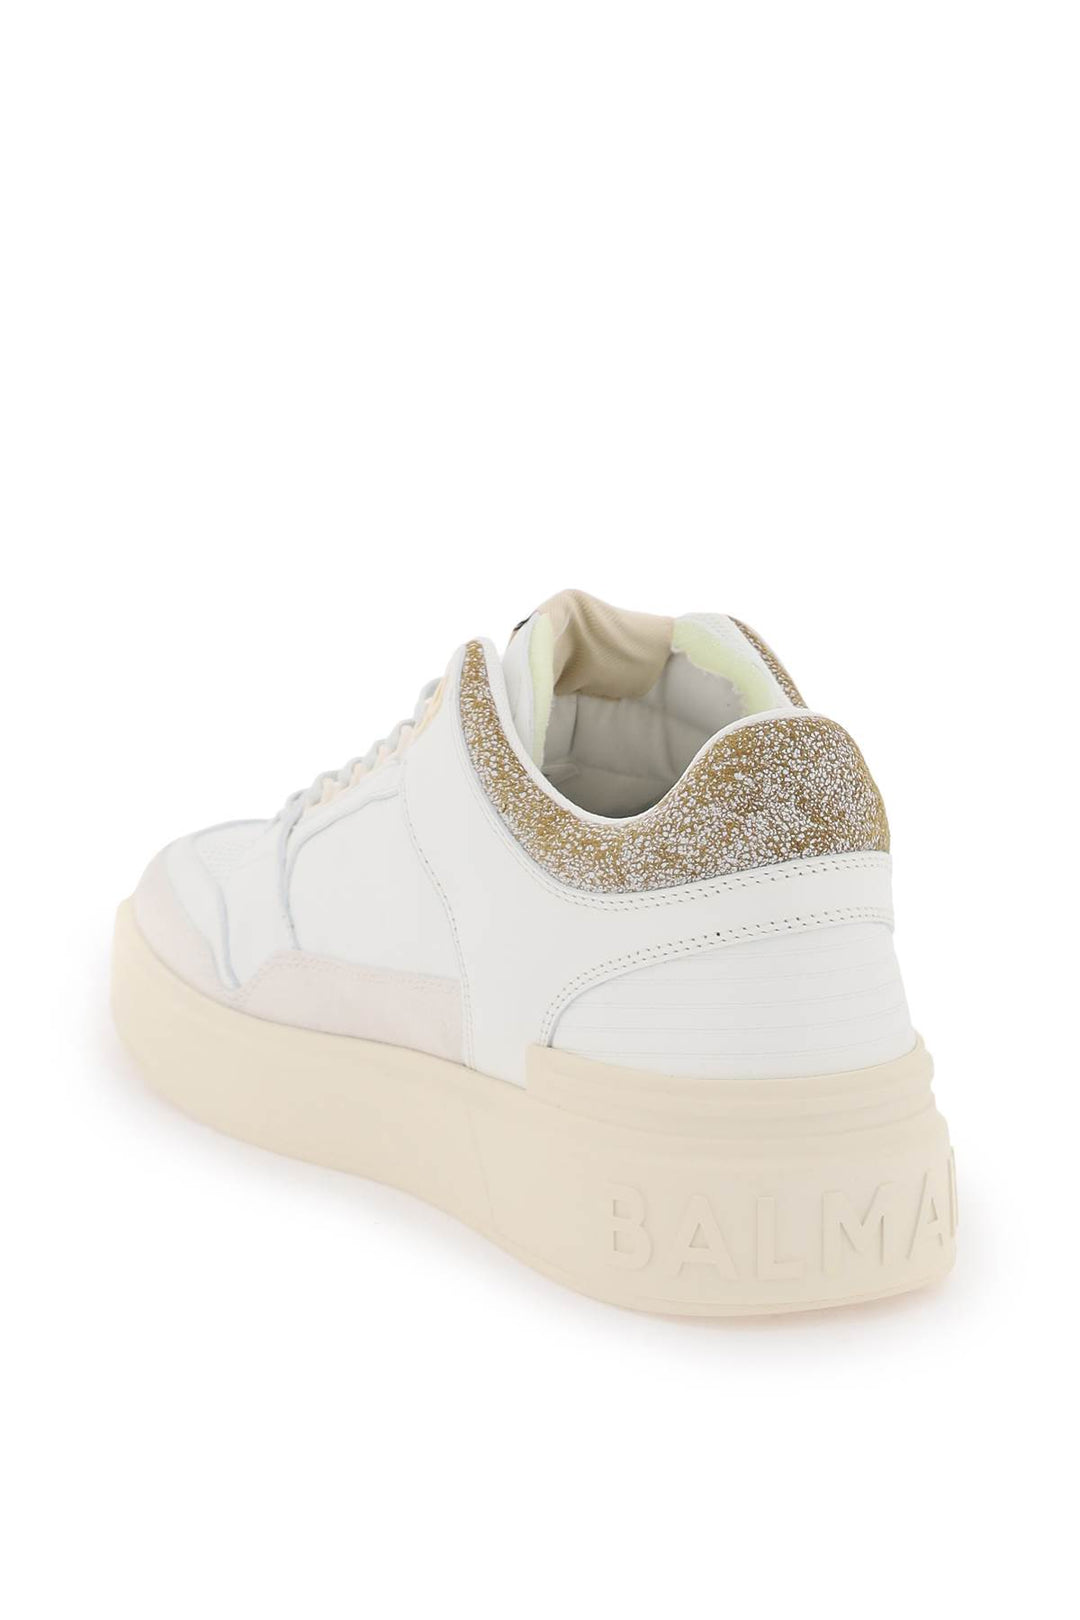 Balmain 'B Court' Mid Top Sneakers   White